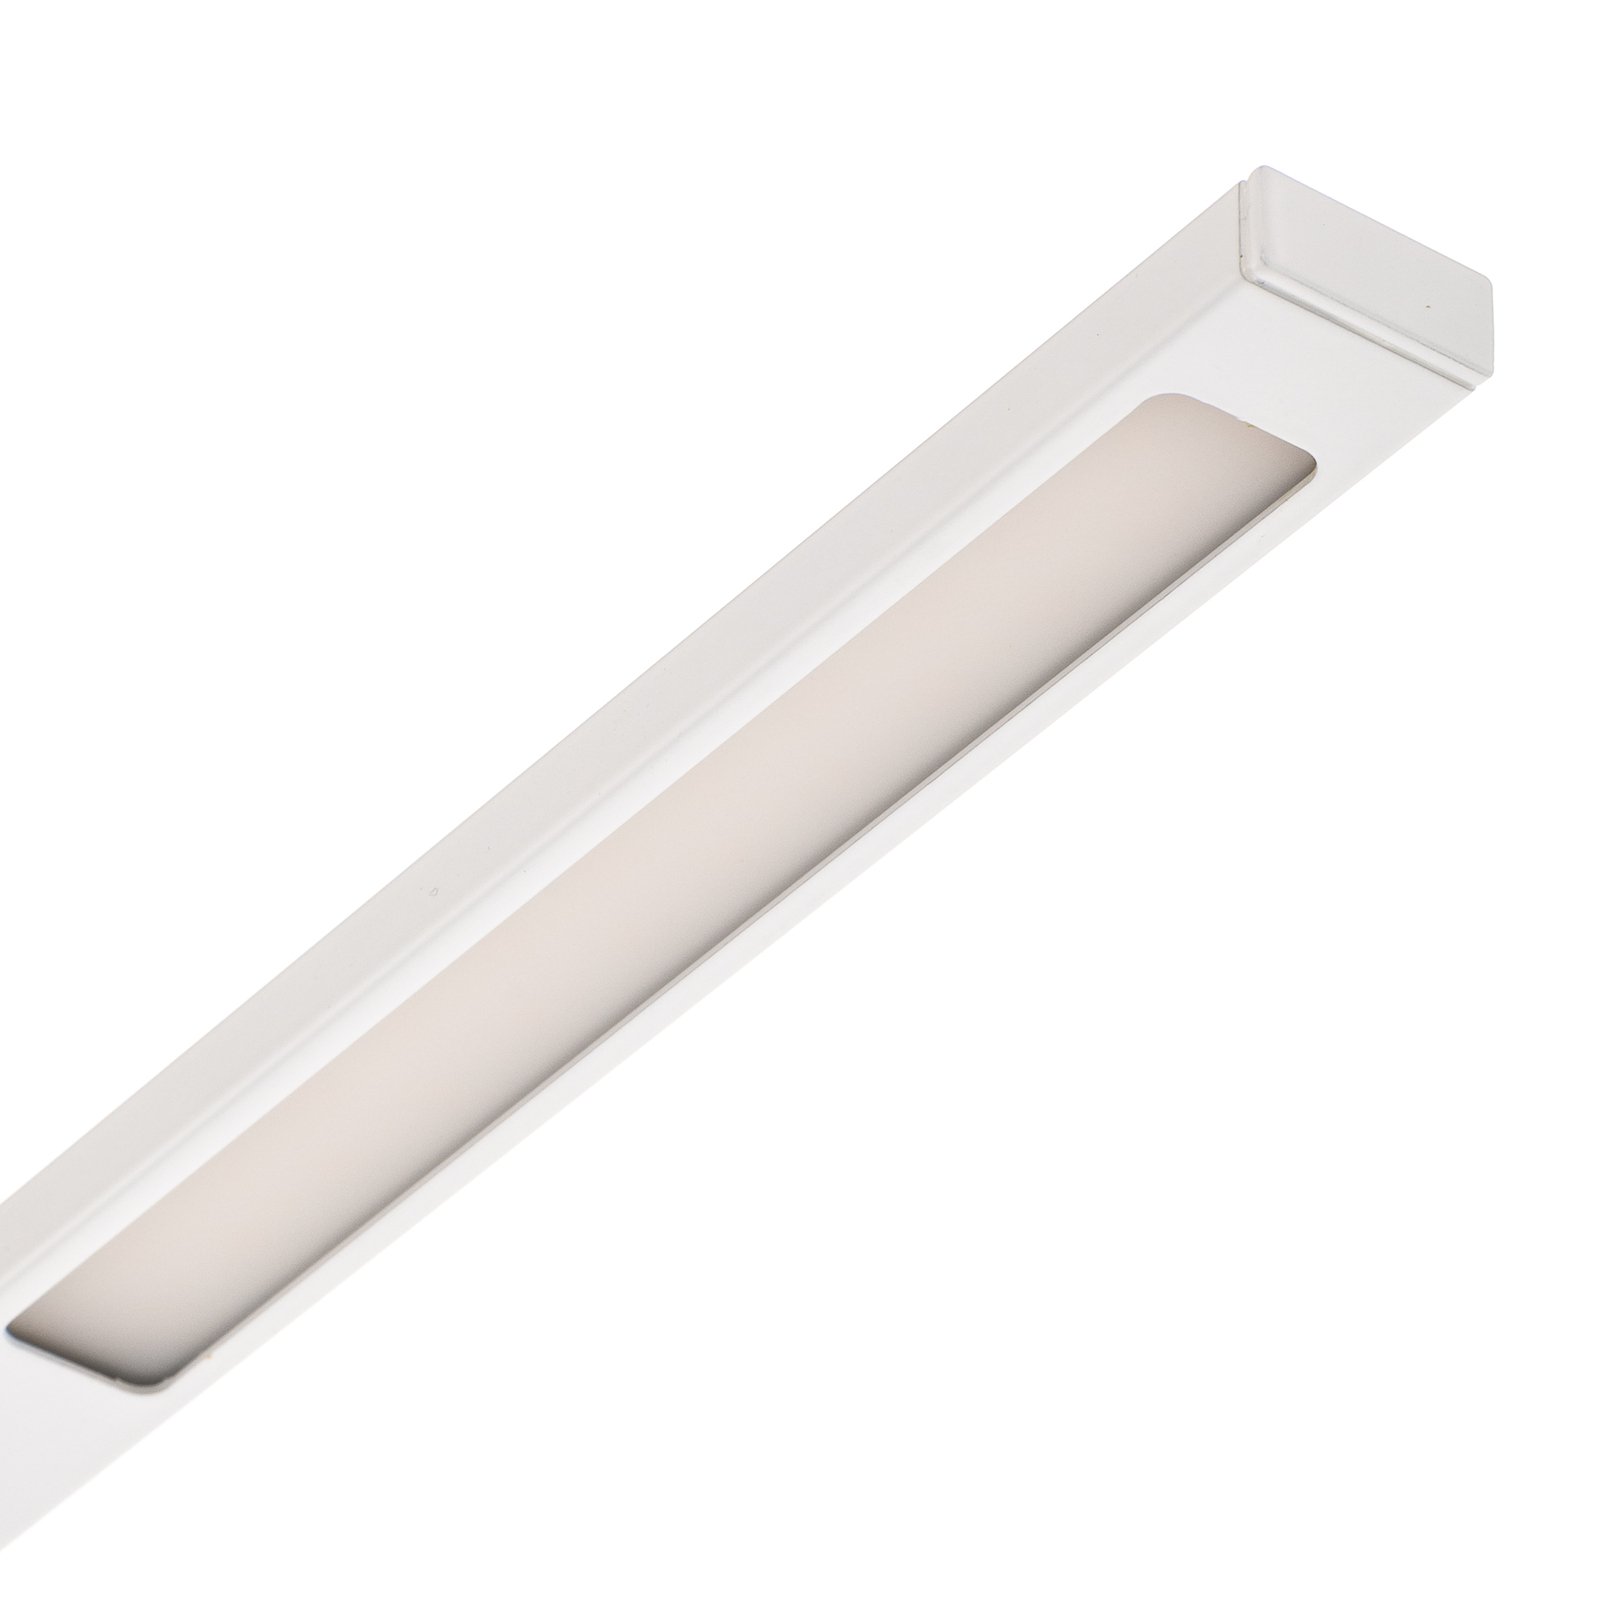 LED bureaulamp Ideal met dimmer, wit